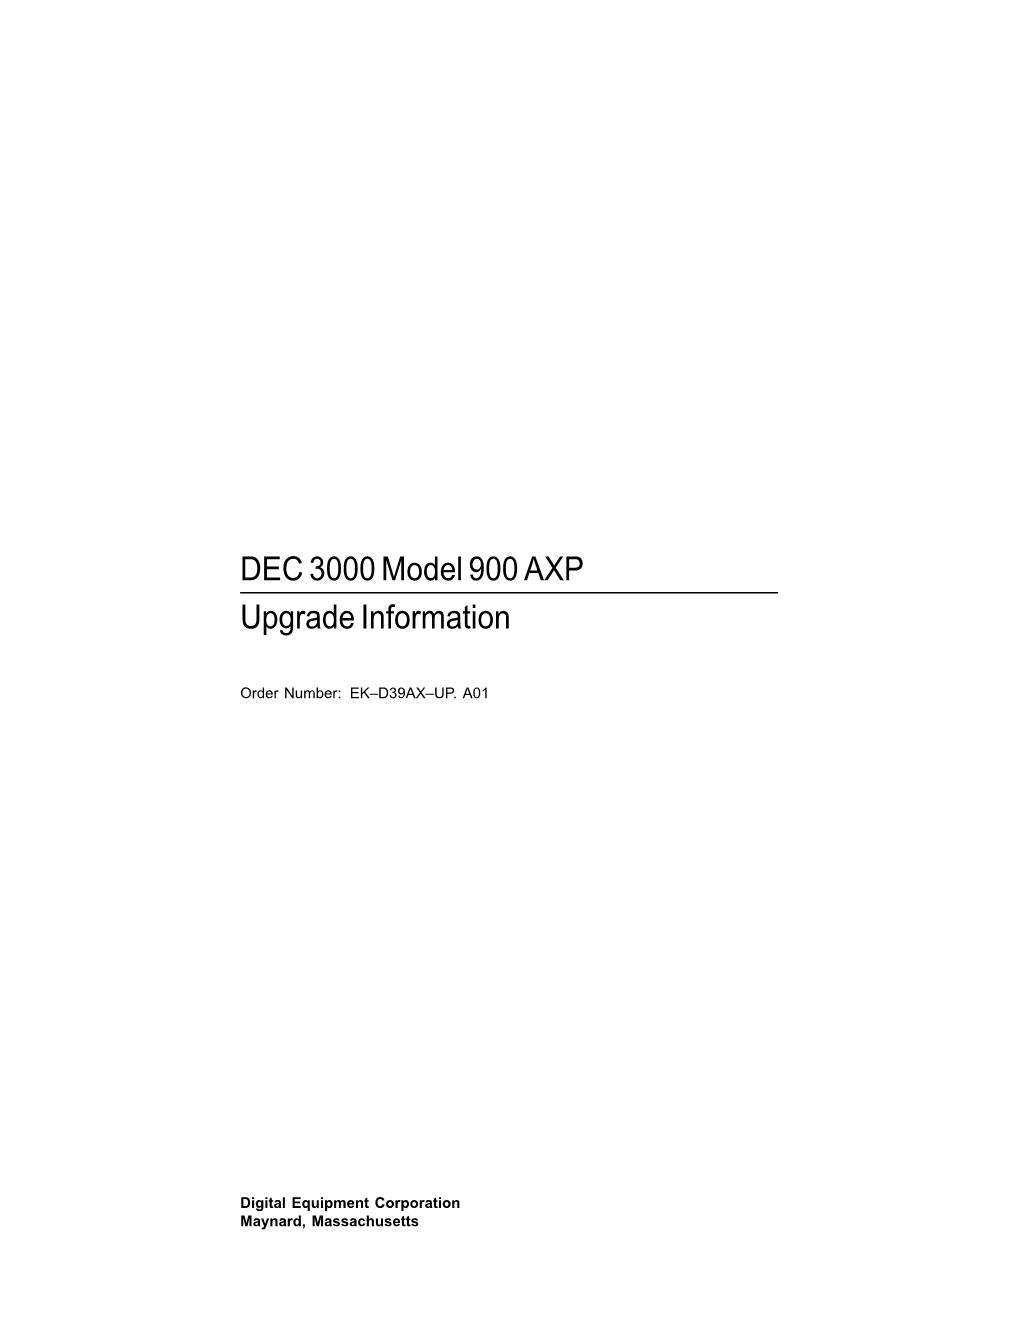 DEC 3000 Model 900 AXP Upgrade Information